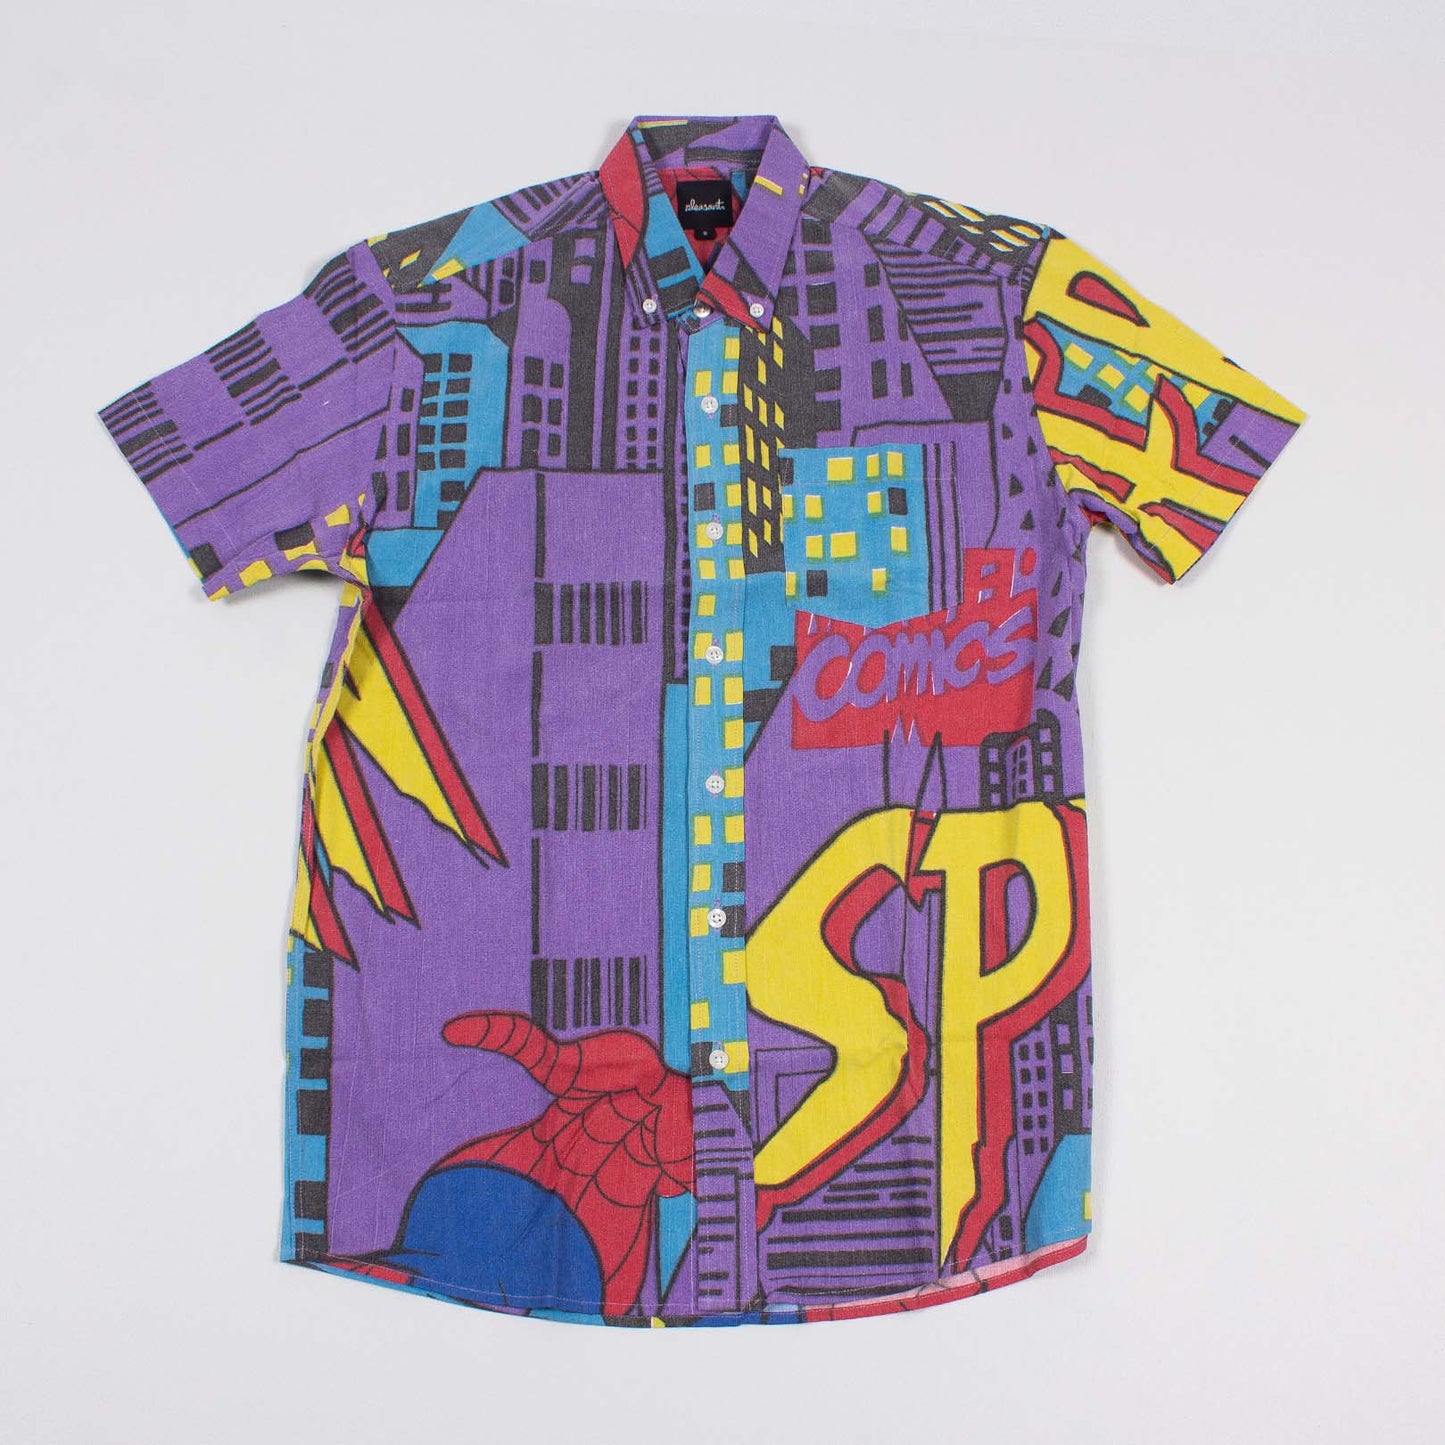 Spiderman style upcycled shirt